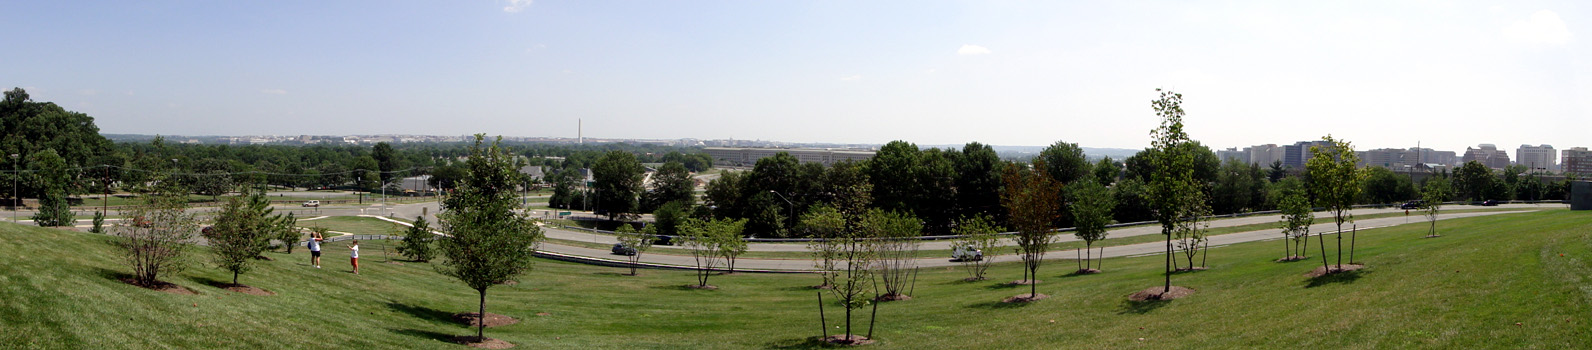 View of Washington